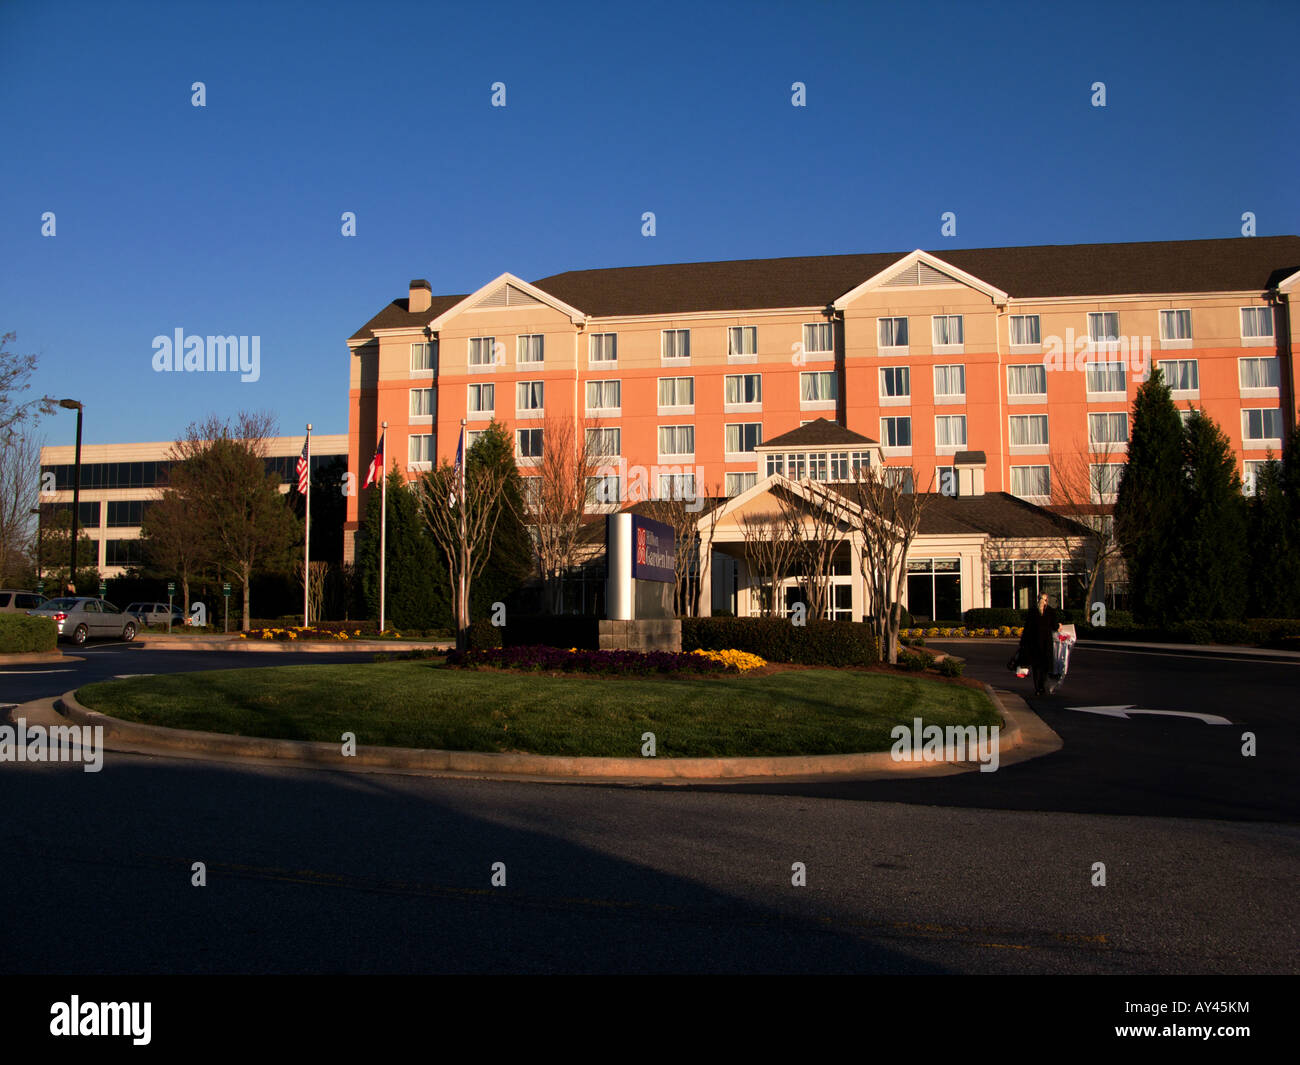 Hilton Garden Inn in Georgia, USA Stock Photo